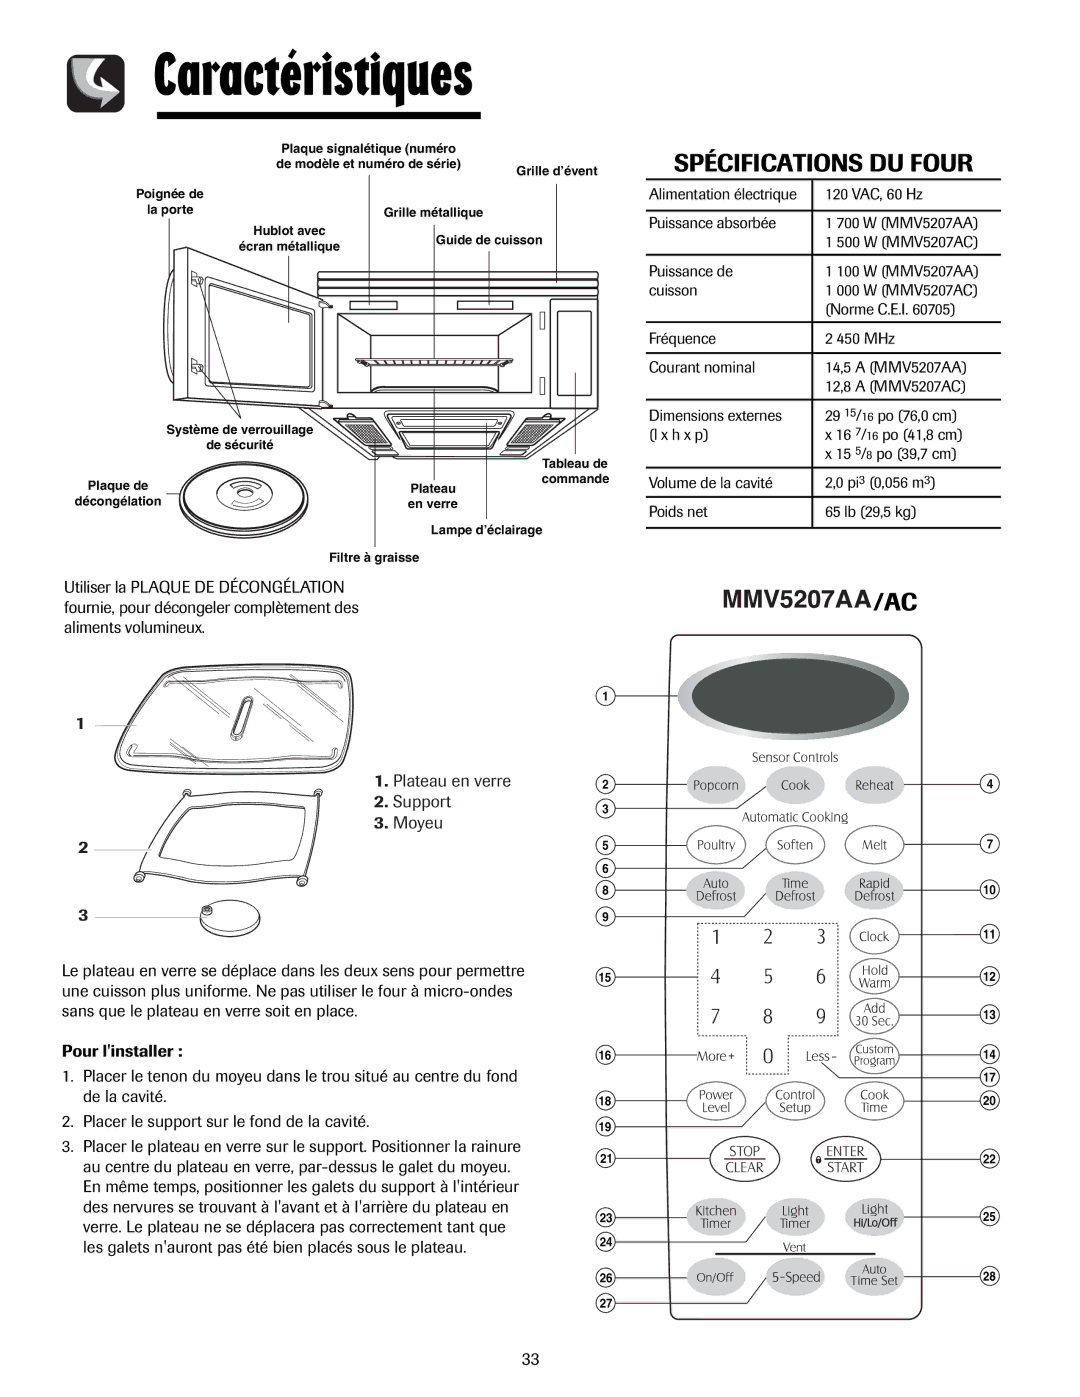 Maytag MMV5207AC, MMV5207AA important safety instructions Caractéristiques, Spécifications DU Four, 120 VAC, 60 Hz 